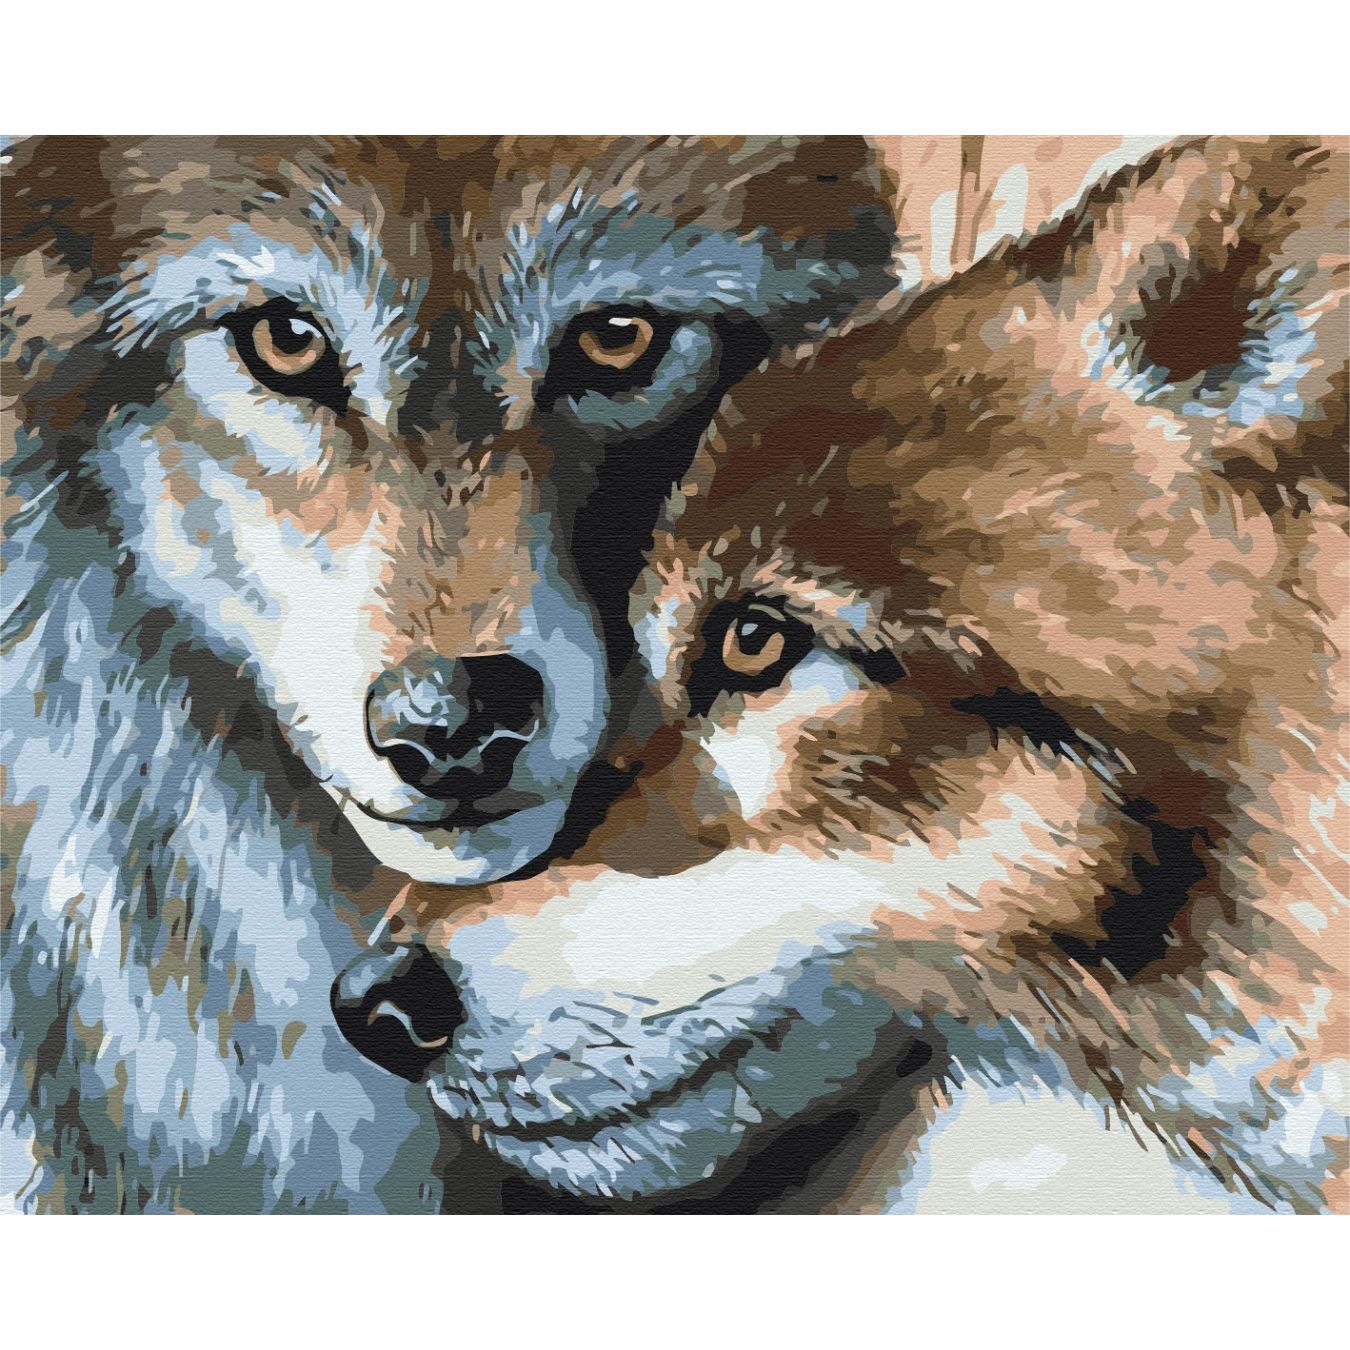 Картина по номерам Волчья пара Brushme 40x50 см разноцветная 000221373 - фото 1